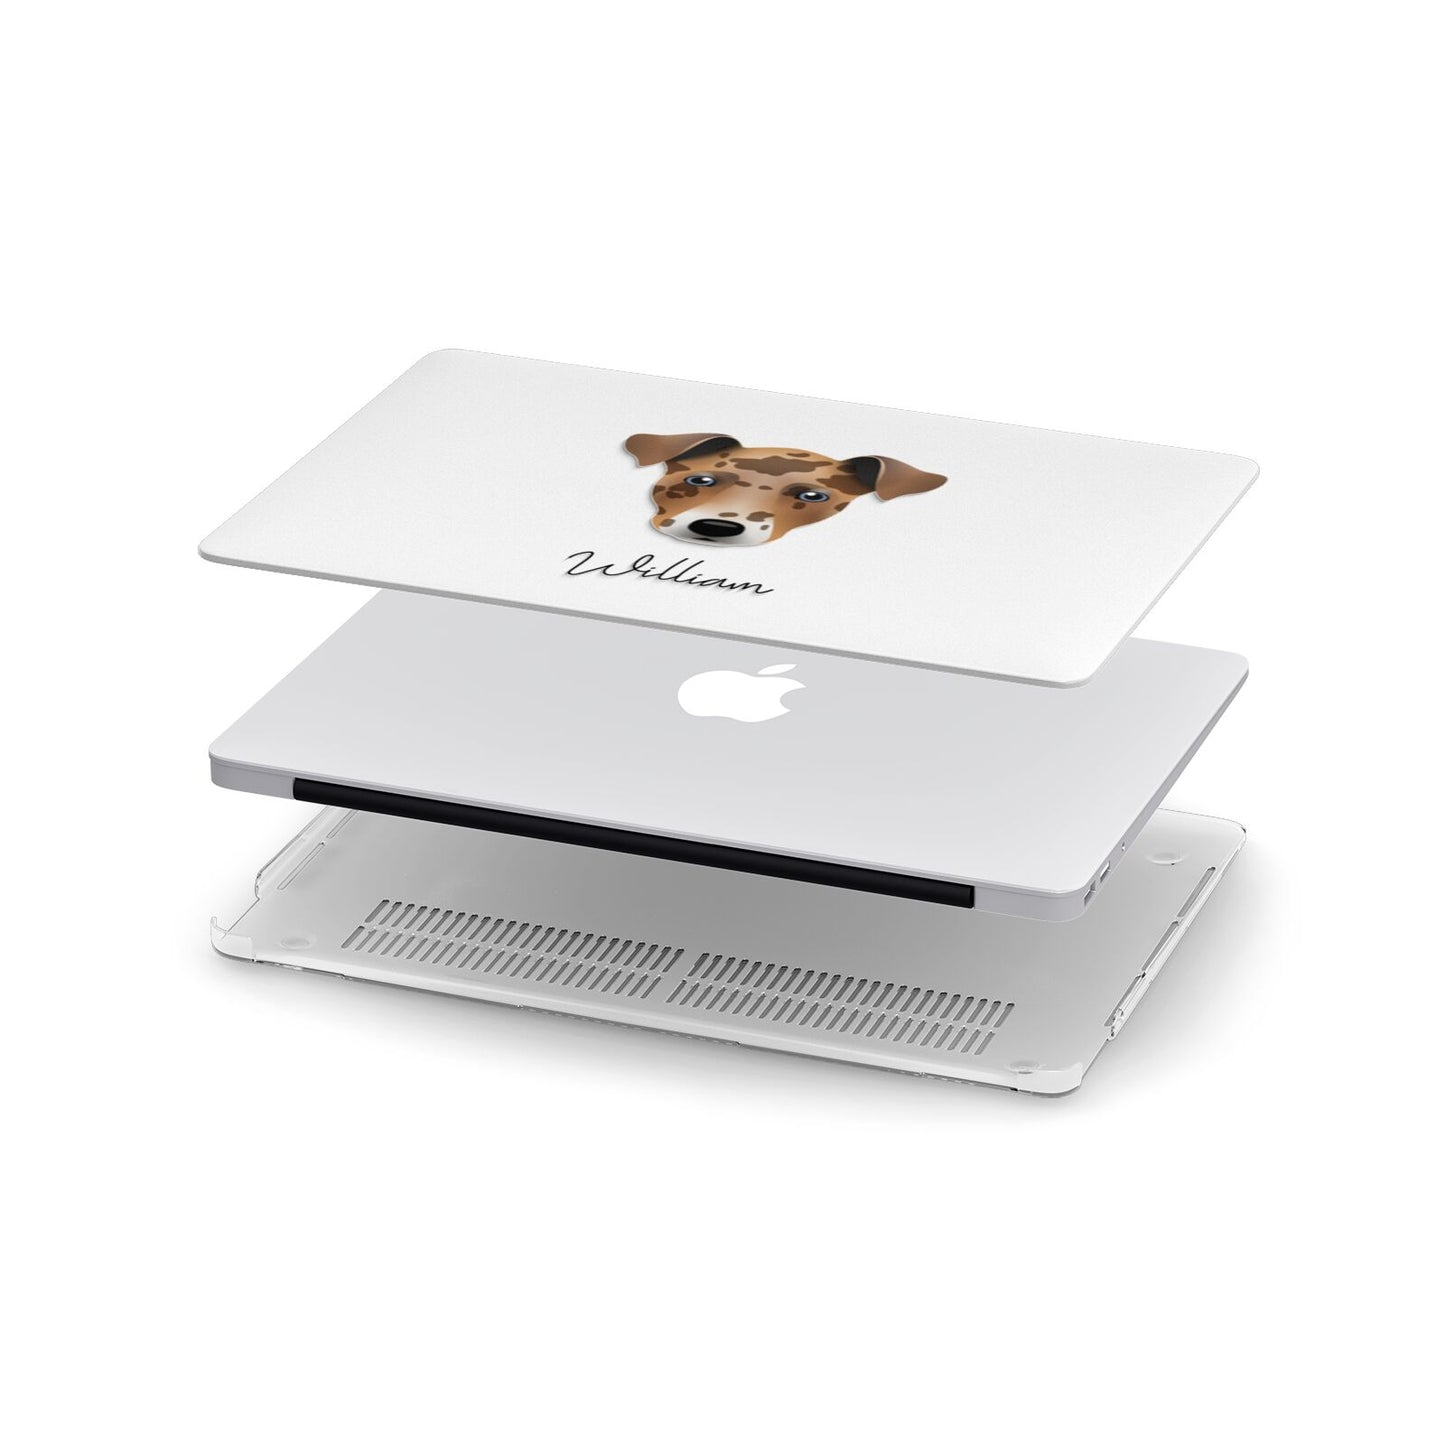 Chi Staffy Bull Personalised Apple MacBook Case in Detail